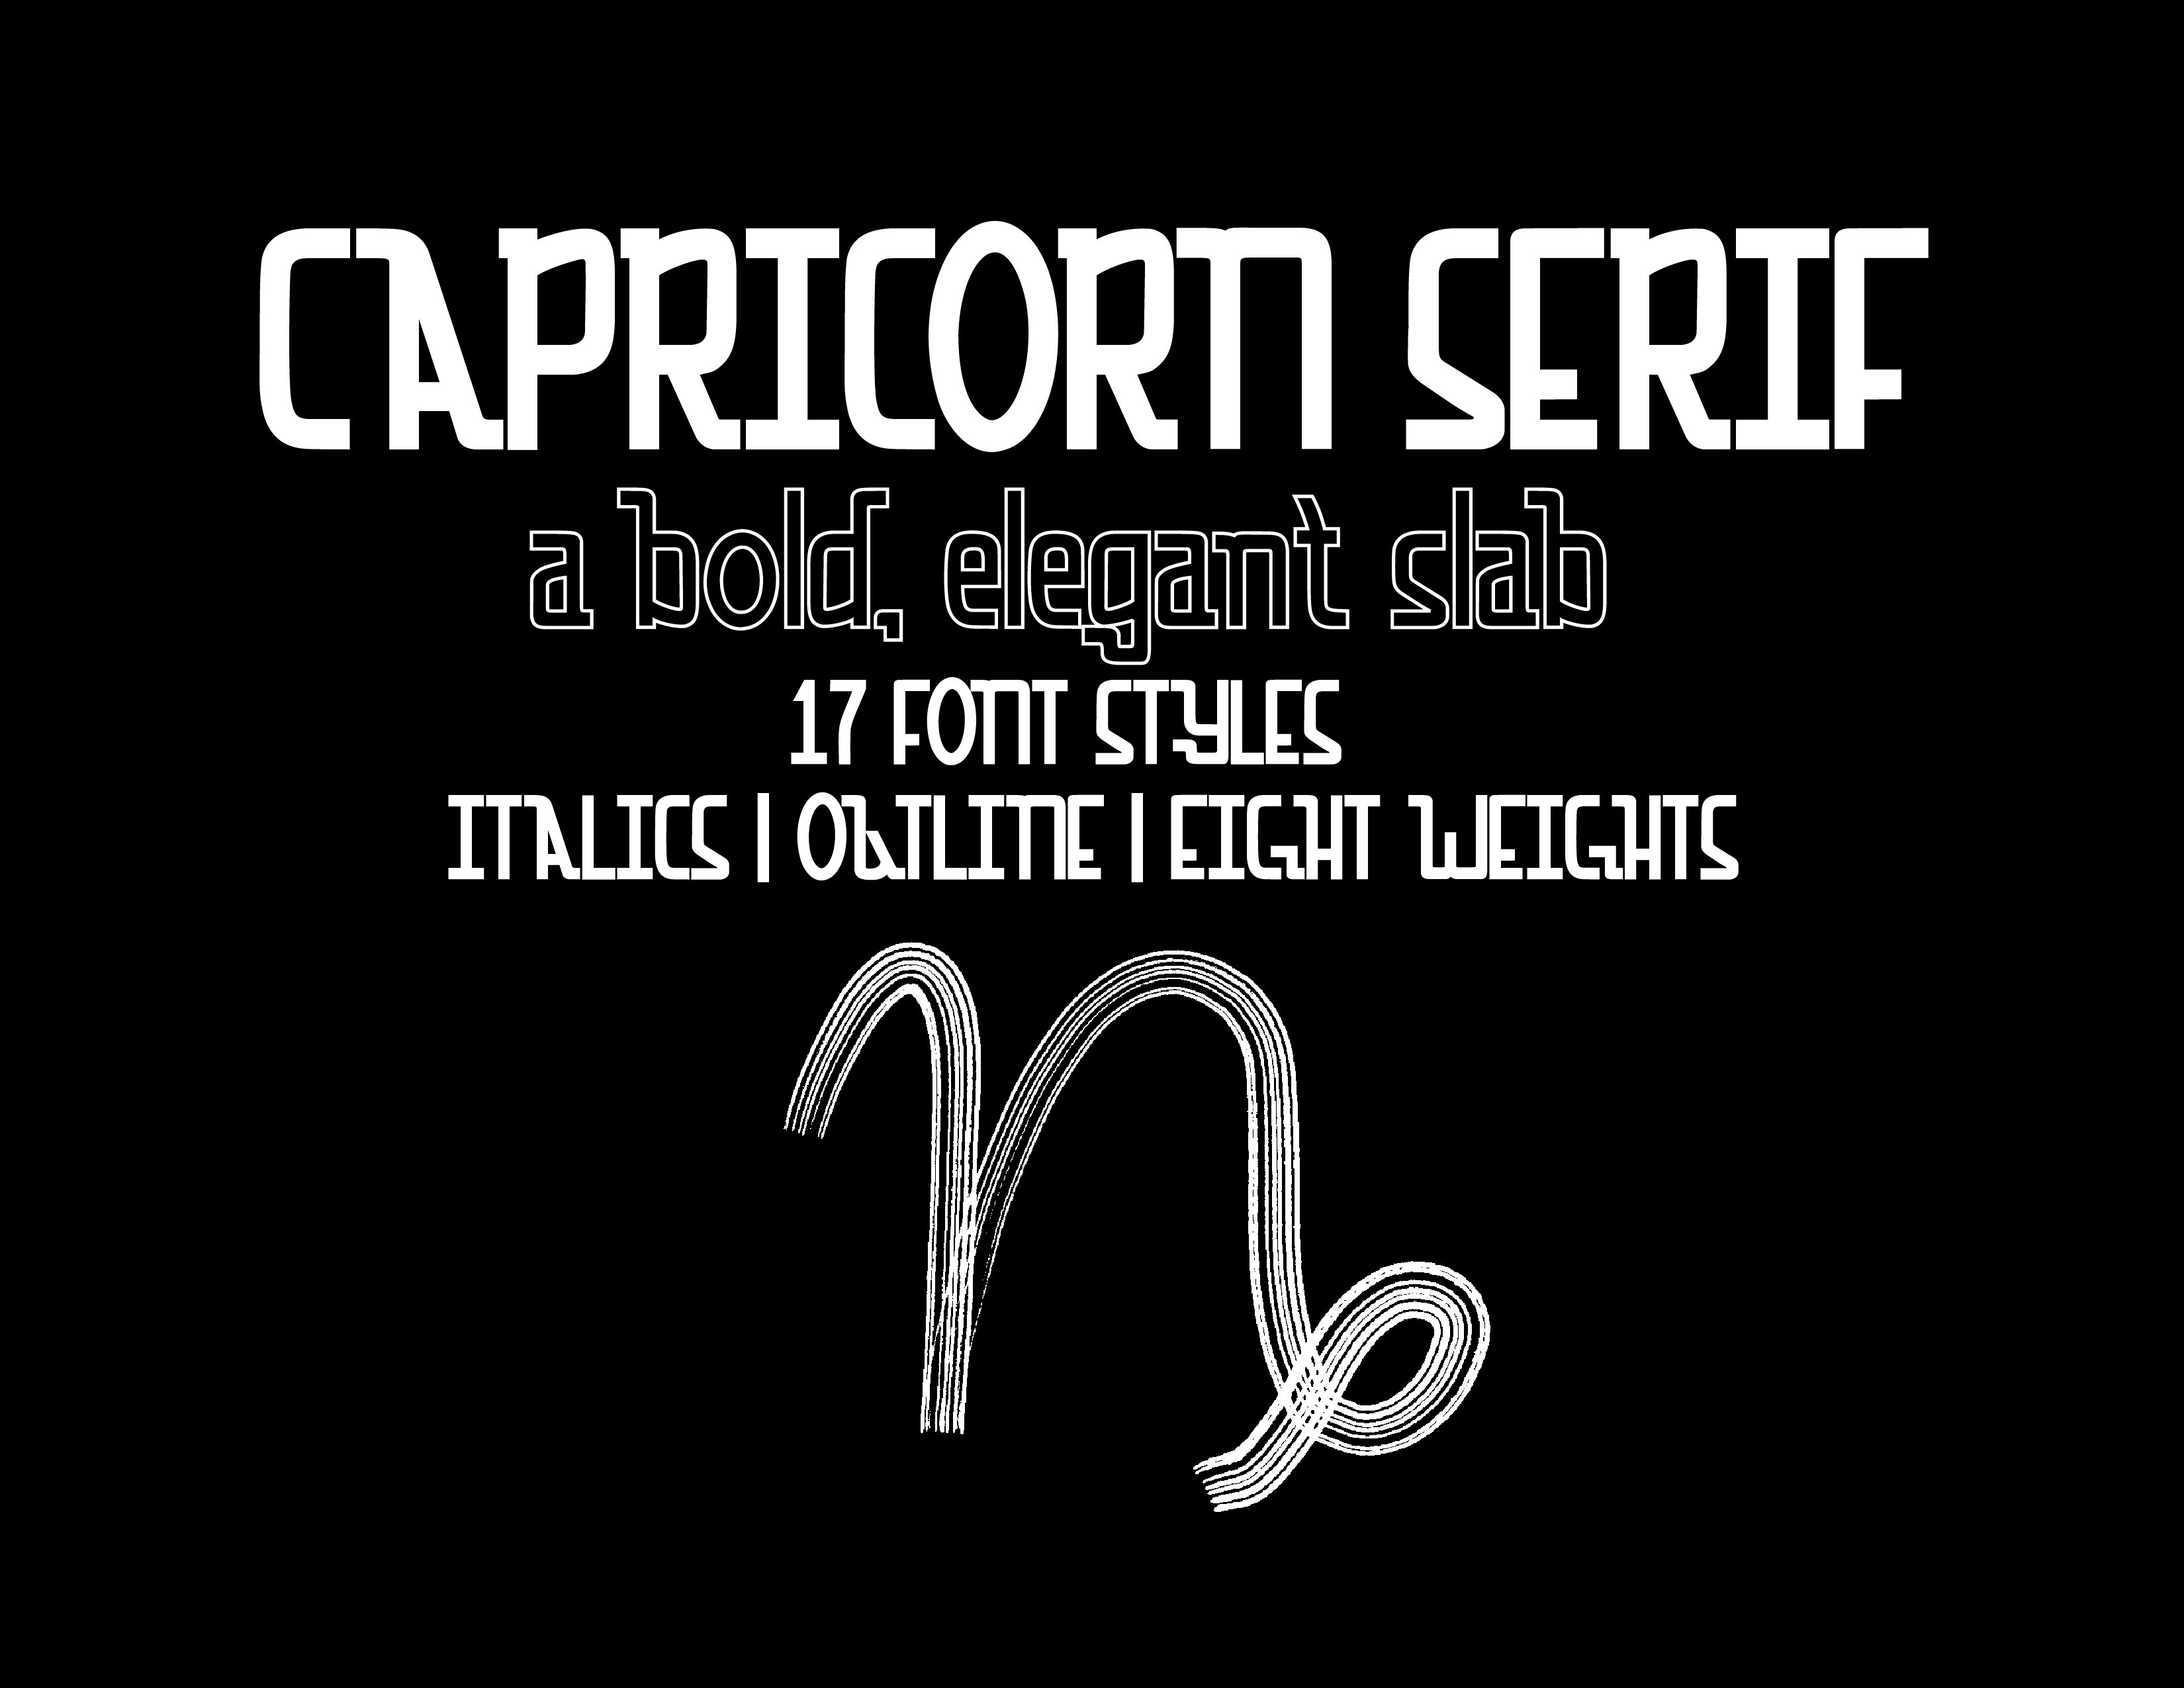 Capricorn Serif Typeface cover image.